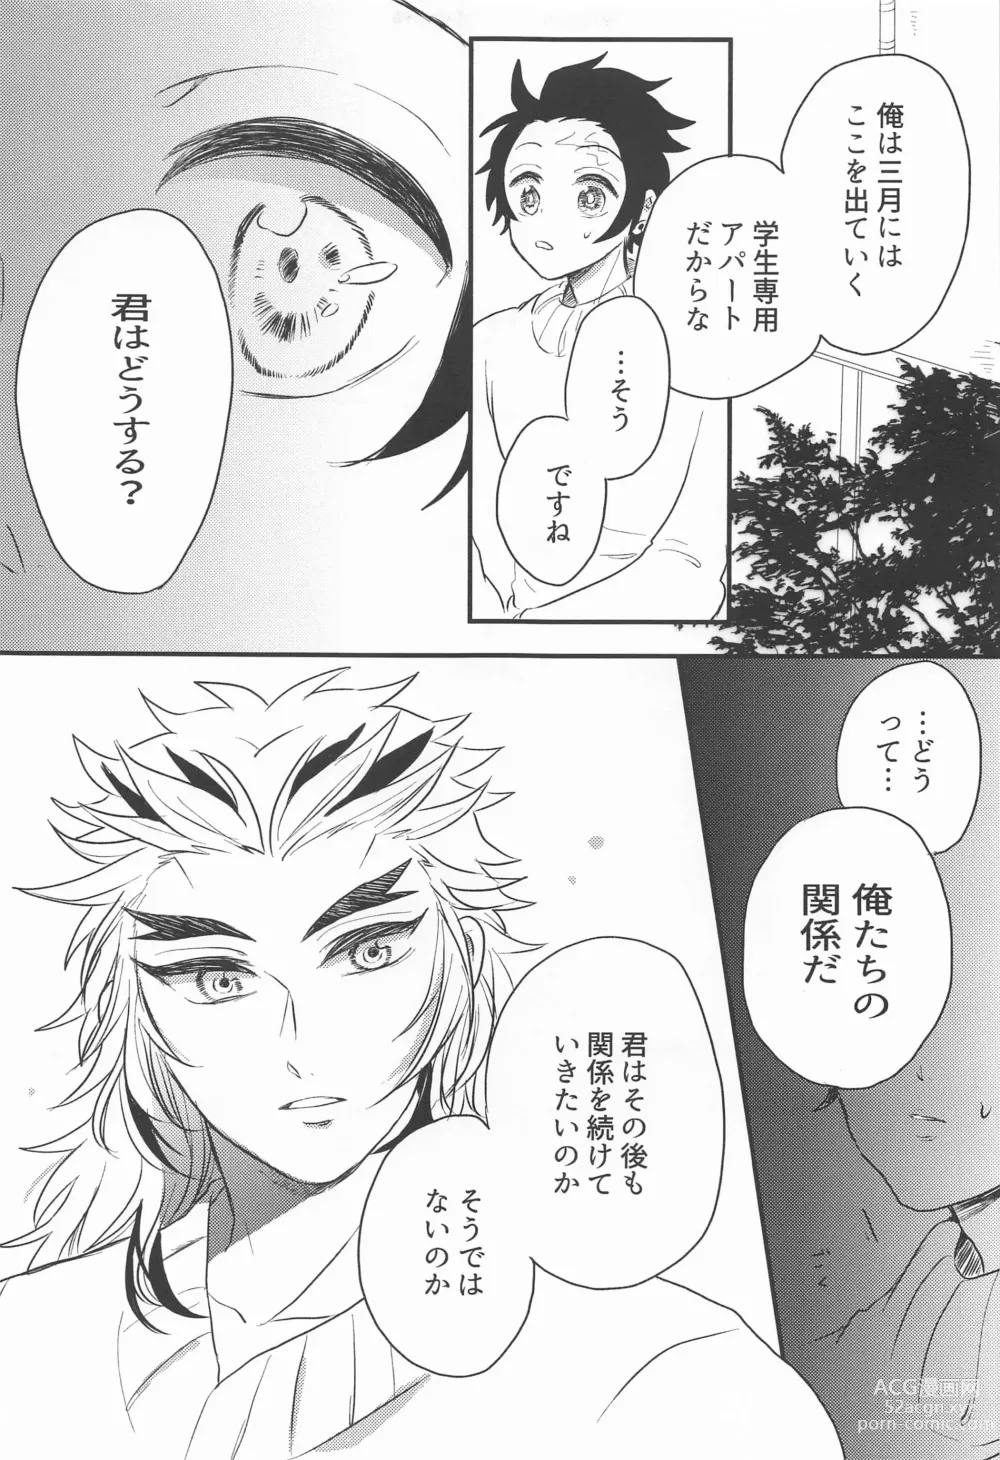 Page 8 of doujinshi Madogiwa no Rinjin To Fuyu no Hi